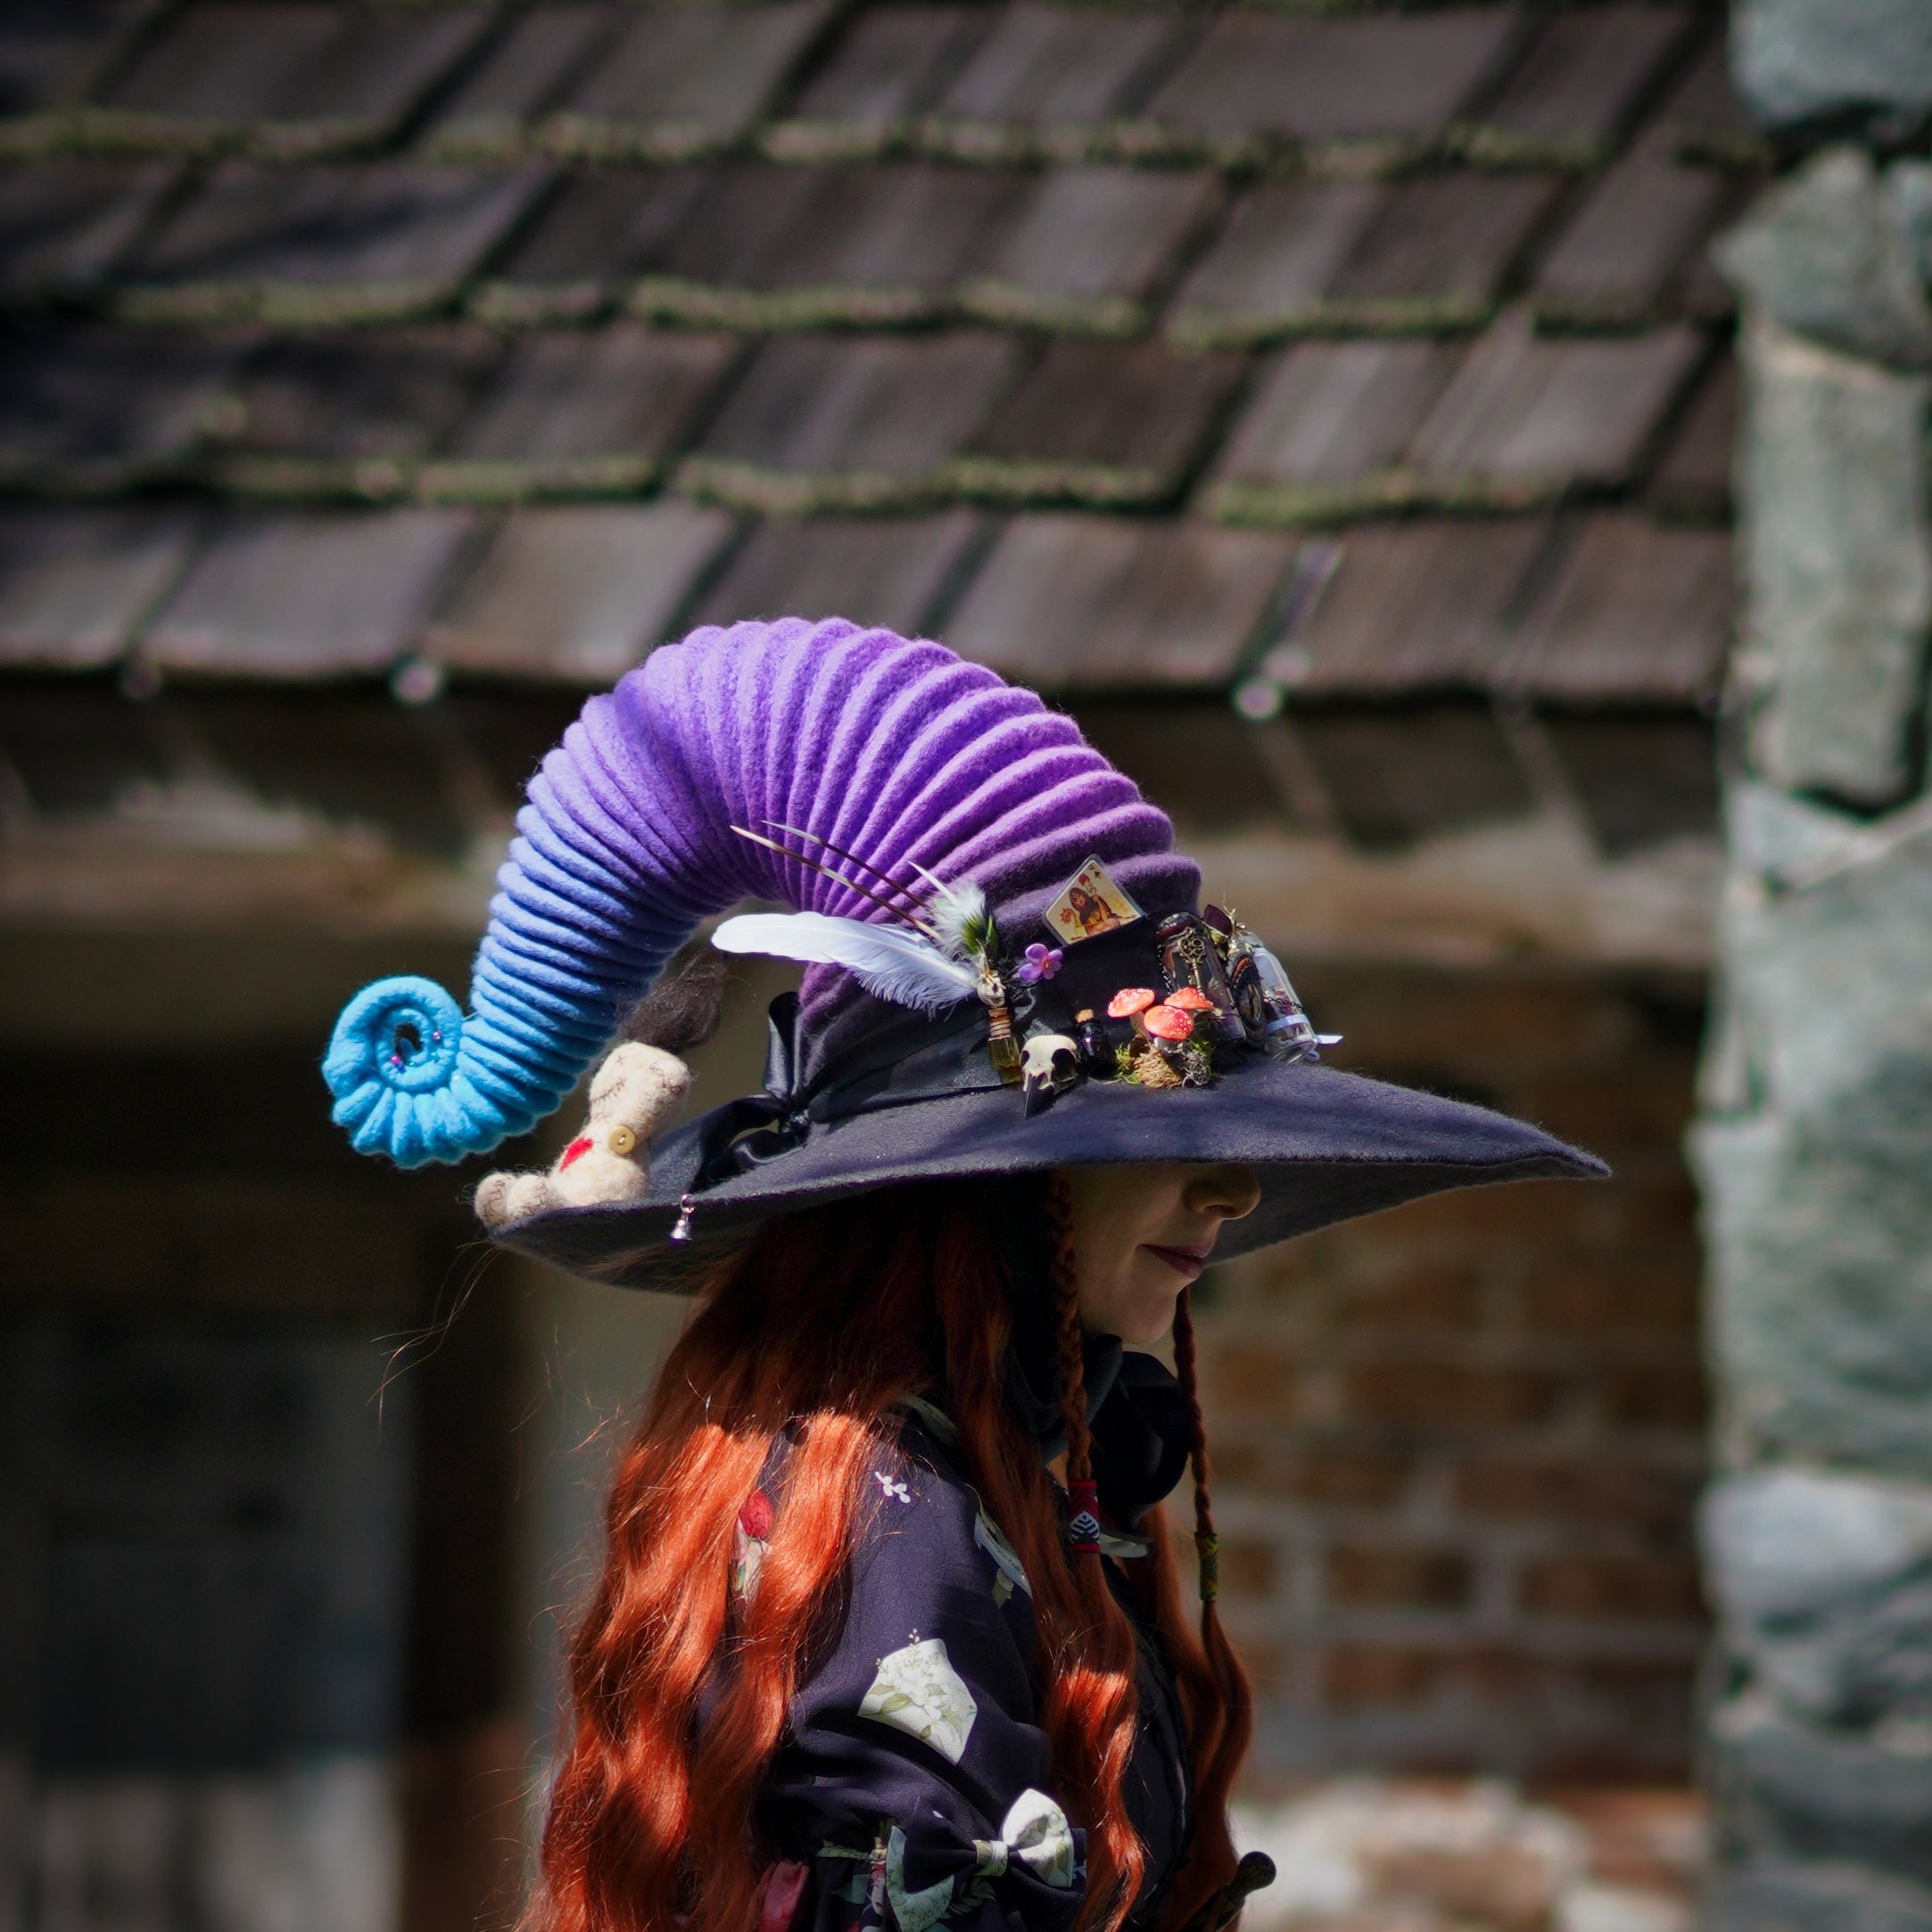 Raven Skull Hat Pin Brooch Pin worn on purple witch hat